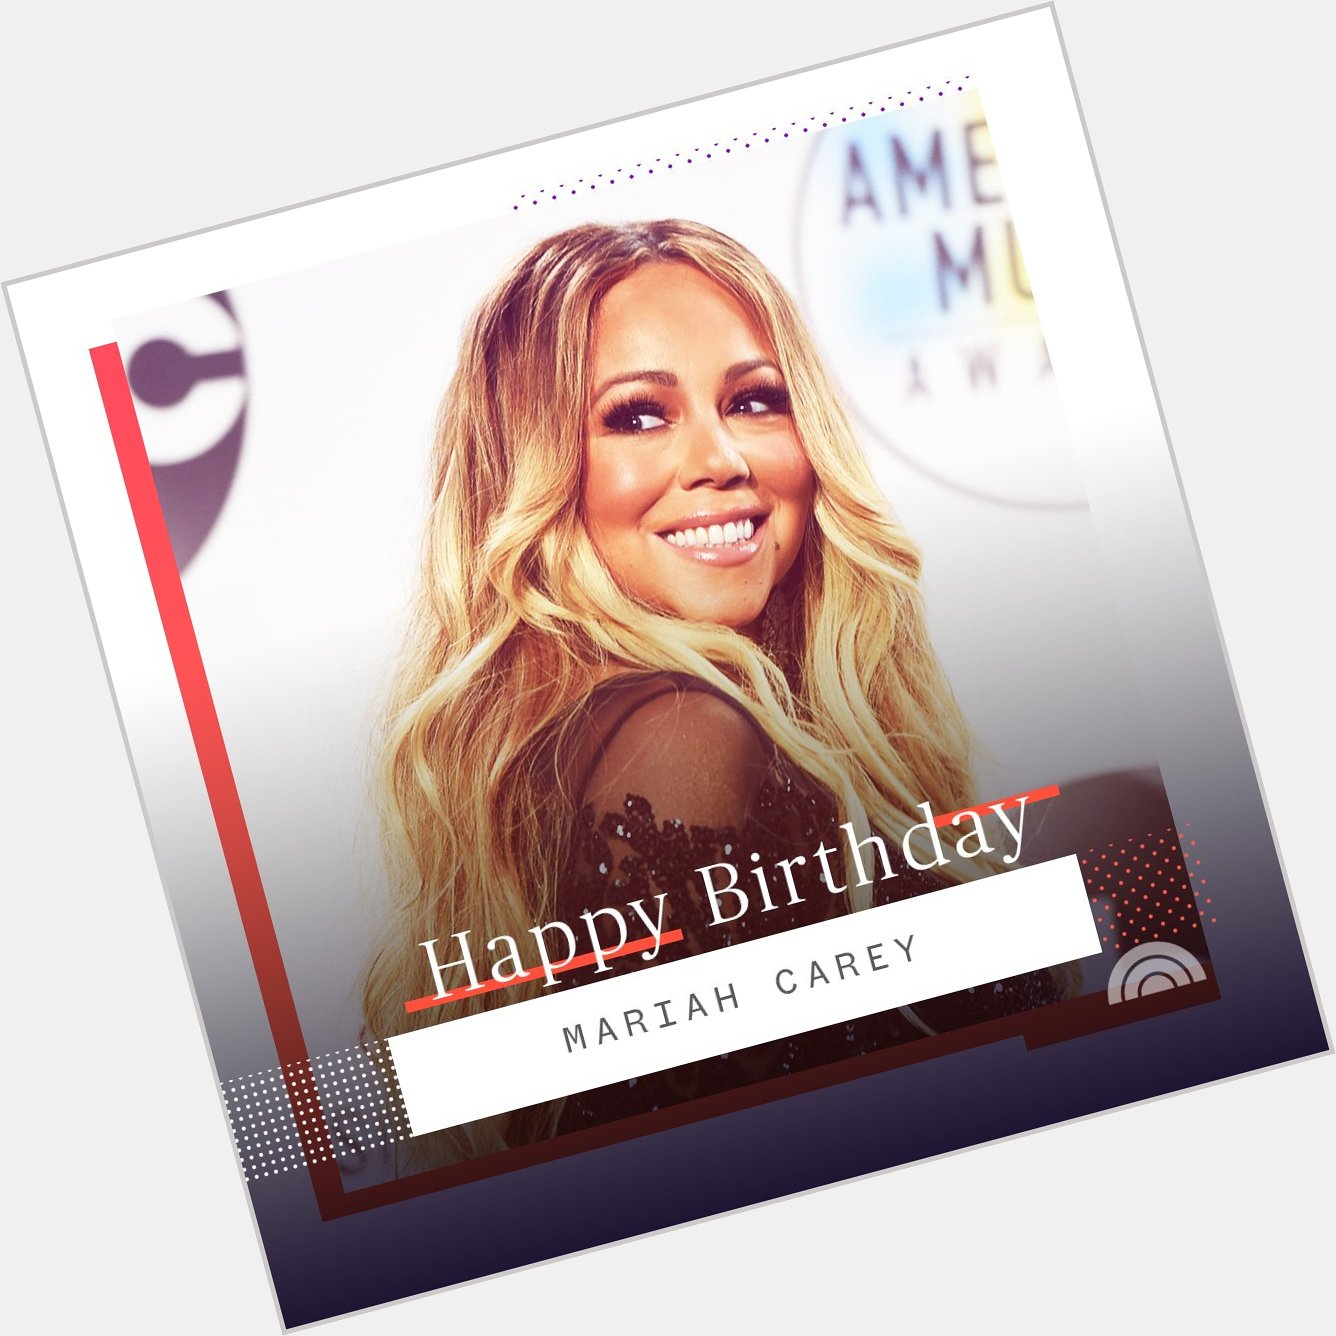 Happy birthday, Mariah Carey! 